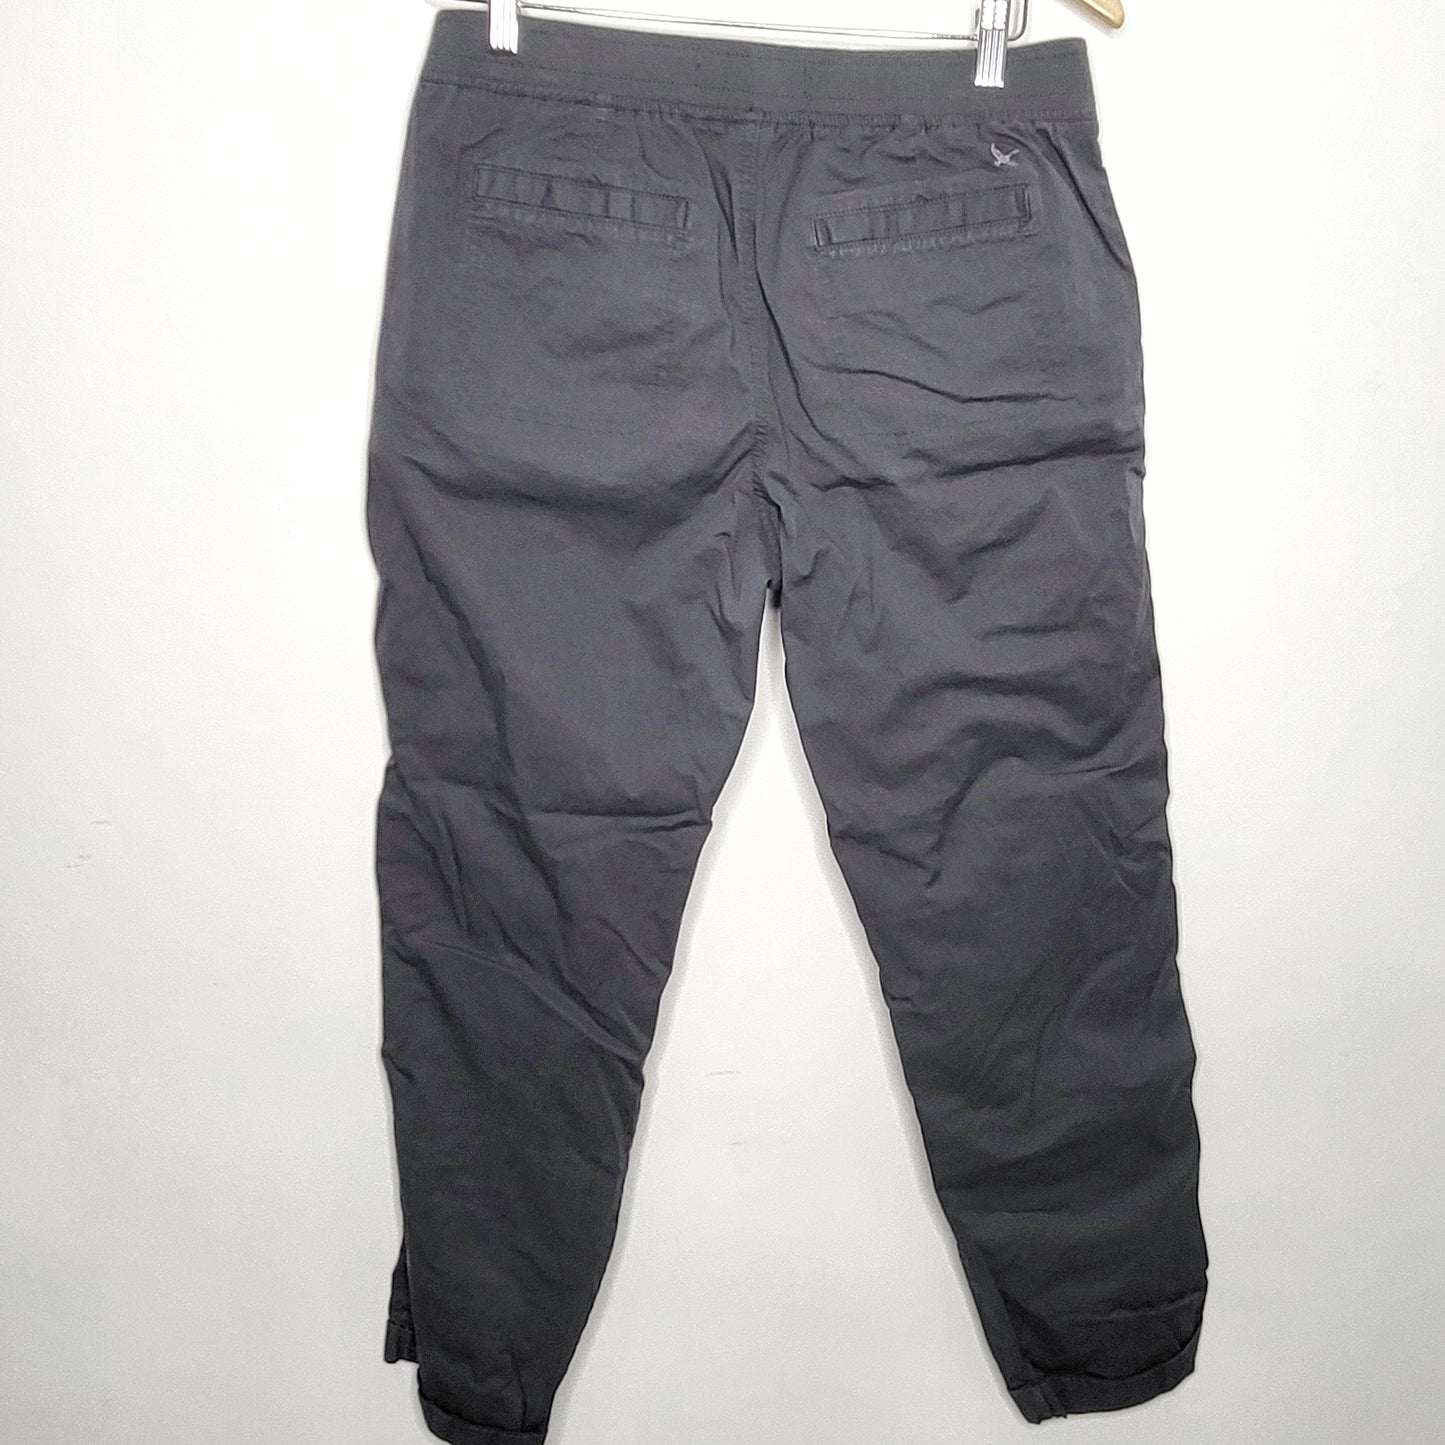 JBAB2 - Eddie Bauer grey cropped cargo pants, size 10, good condition